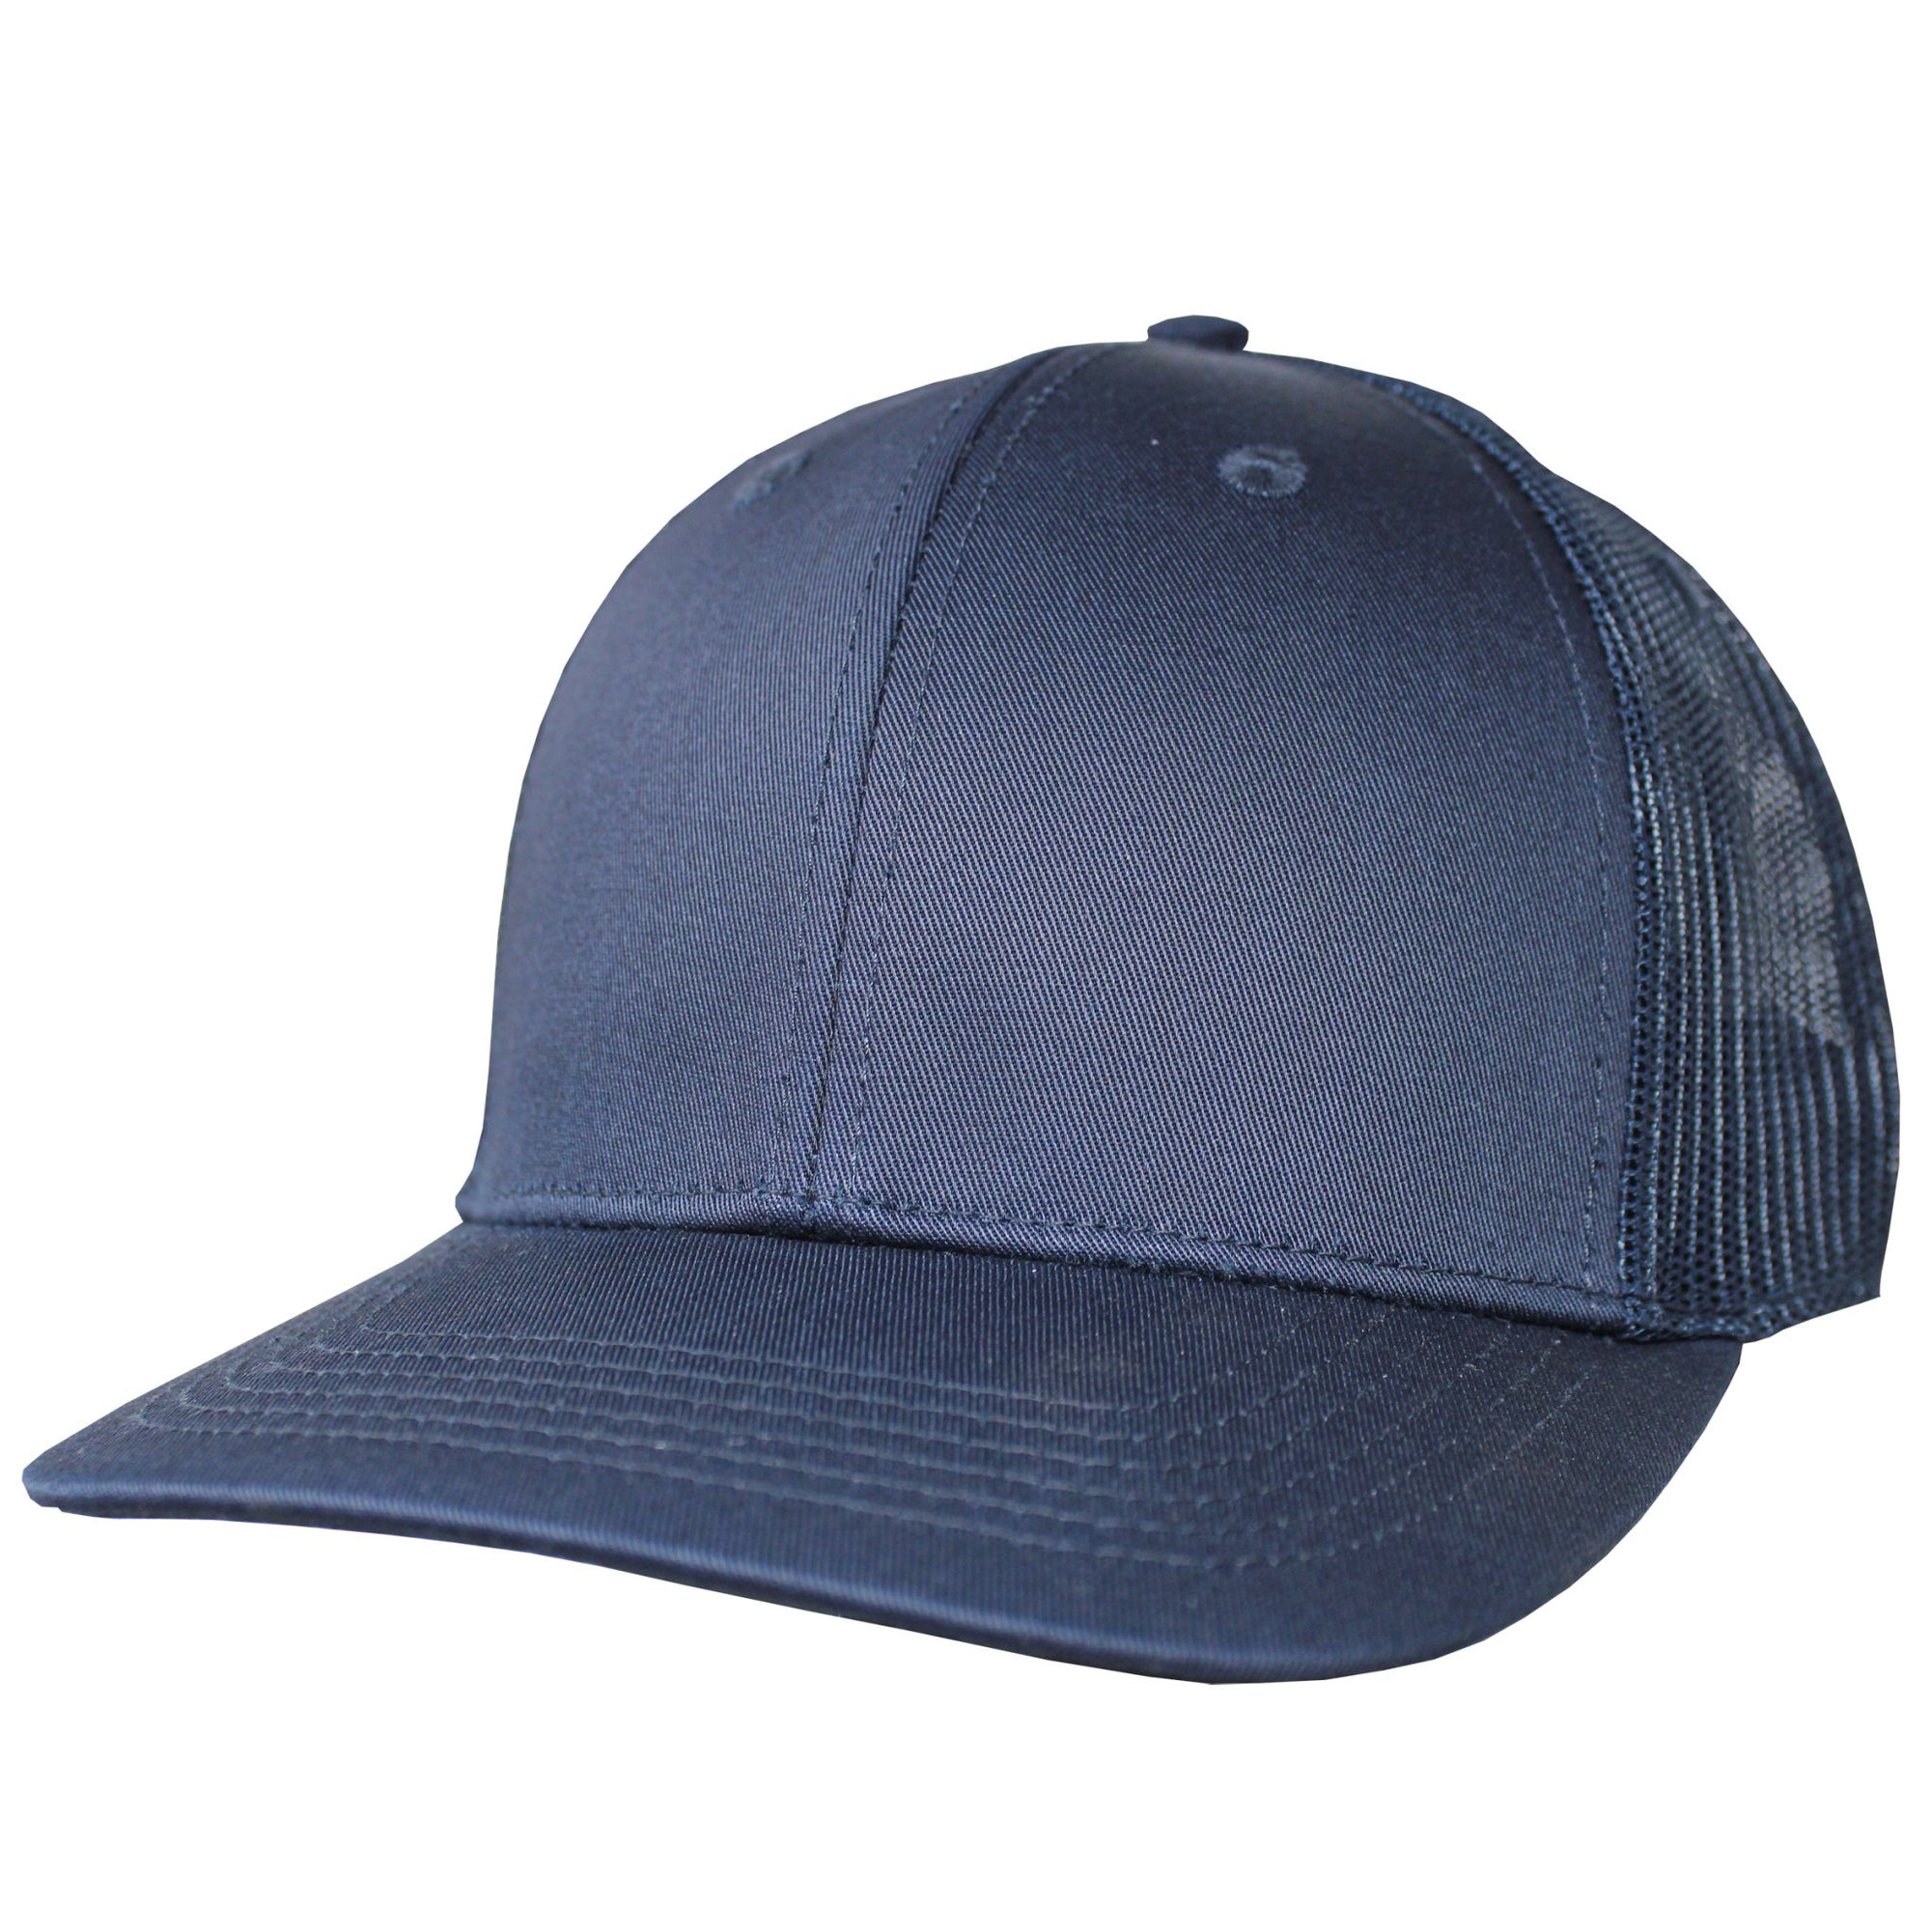 Blank Headwear - BC23 / 6 Panel Performance Trucker Cap - Navy / Navy - Black Cat MFG - Hat